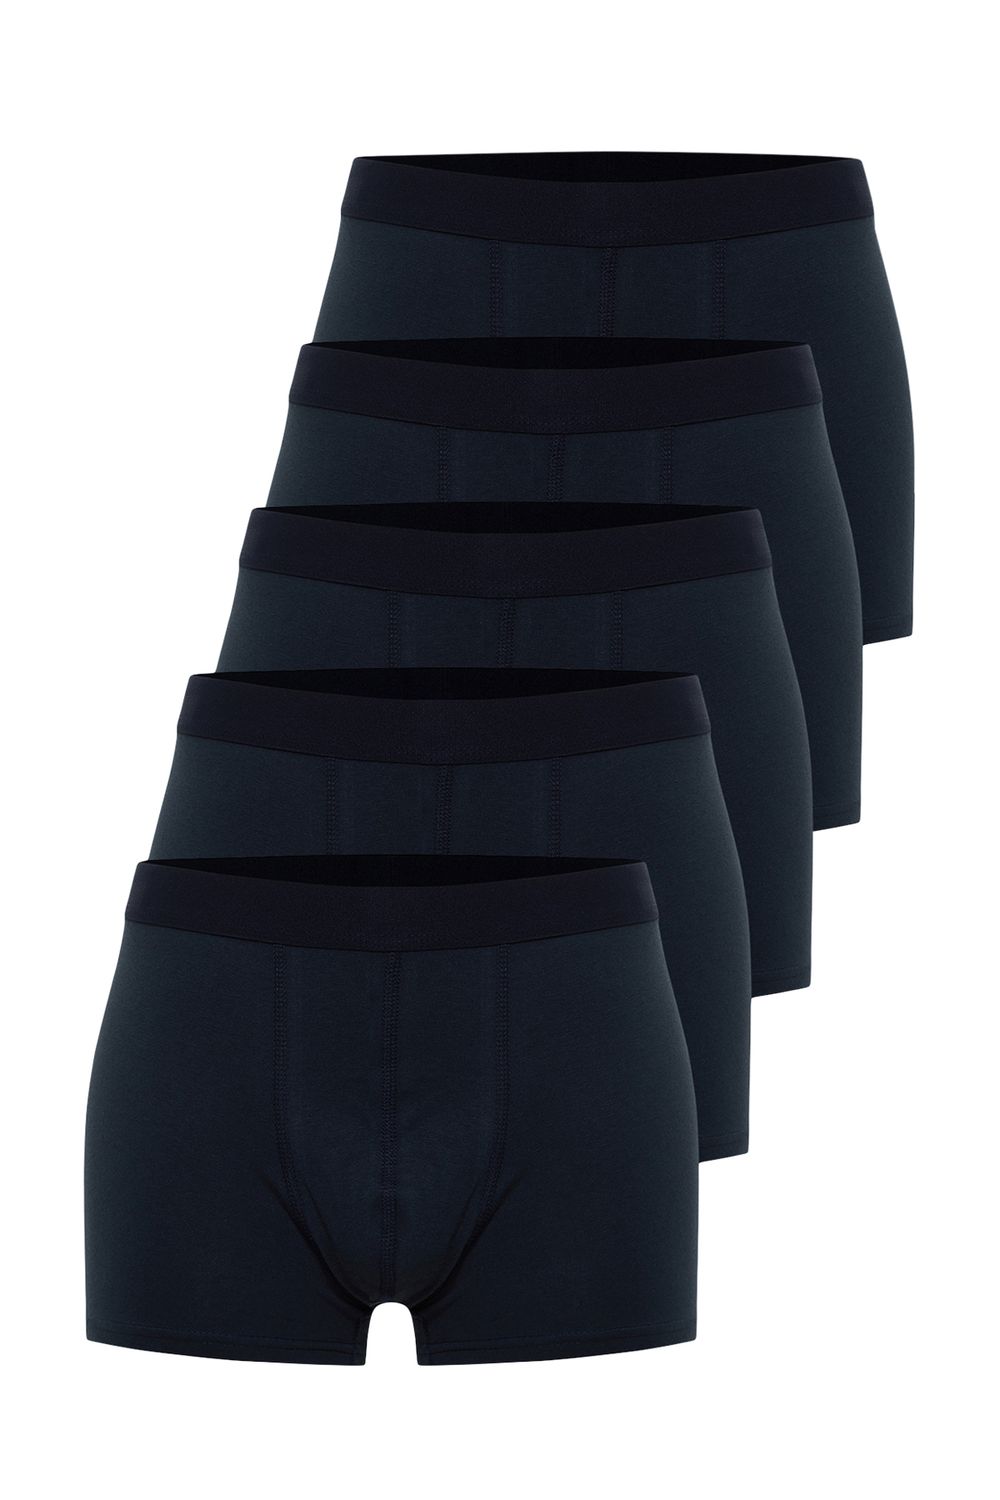 2-pack Cotton-blend Bodysuits - Black/gray melange - Ladies